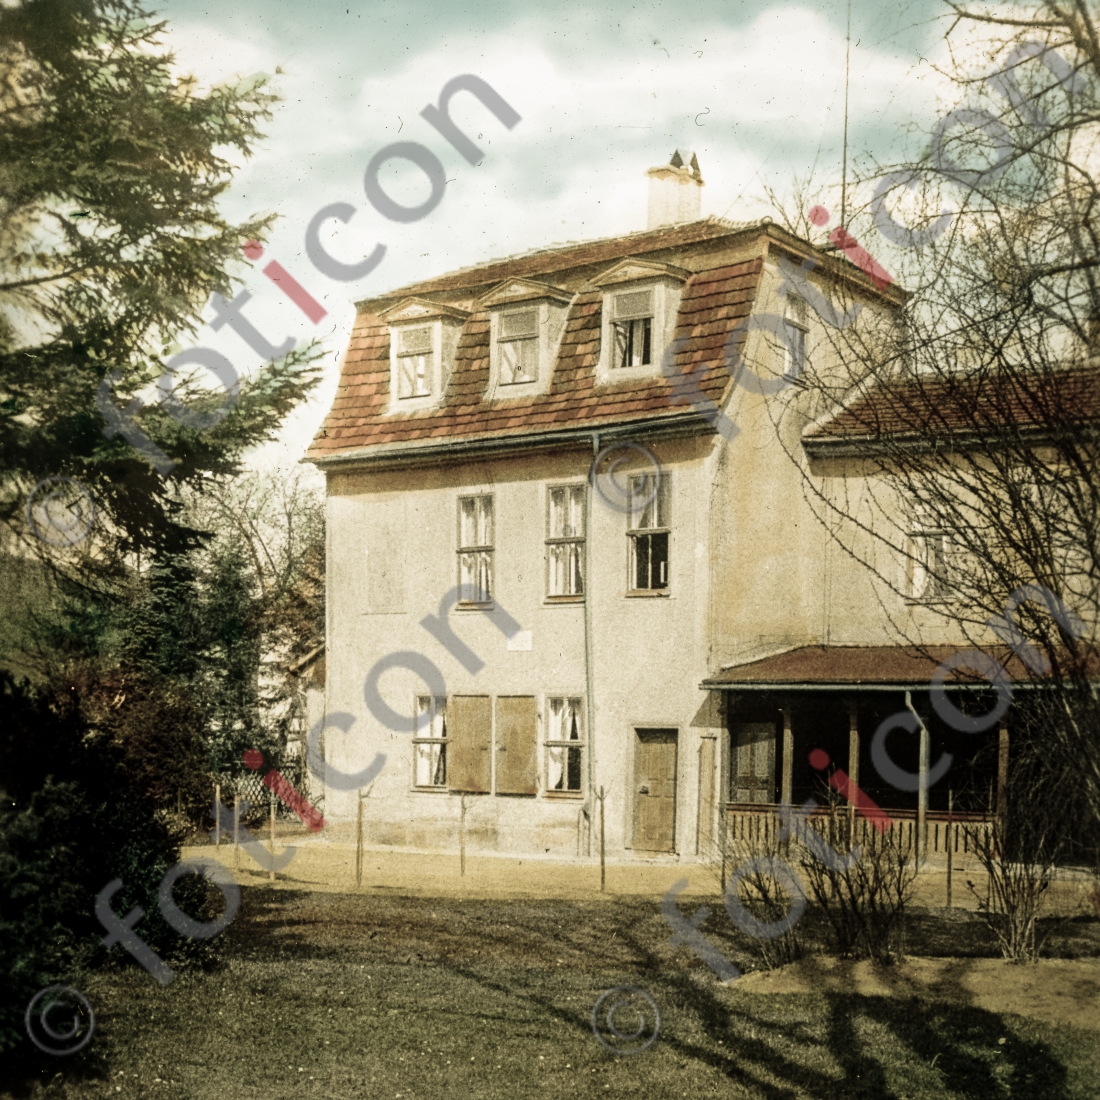 Schillers Gartenhaus | Schiller's garden house (simon-156-044.jpg)